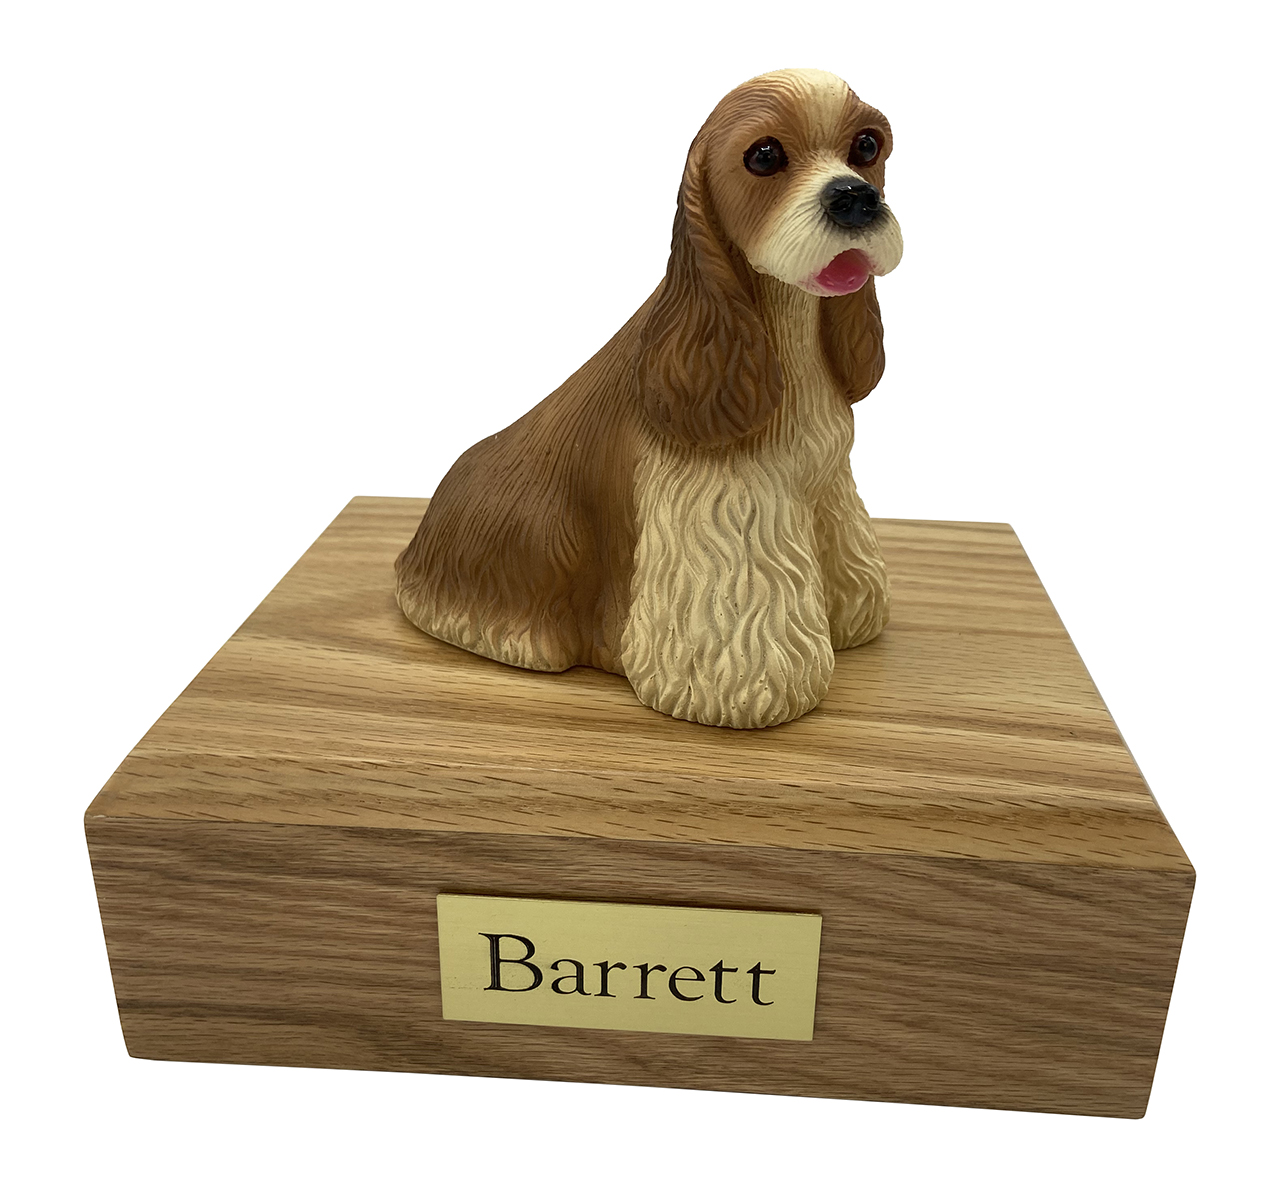 Dog, Cocker Spaniel, Buff (Less White) - Figurine Urn